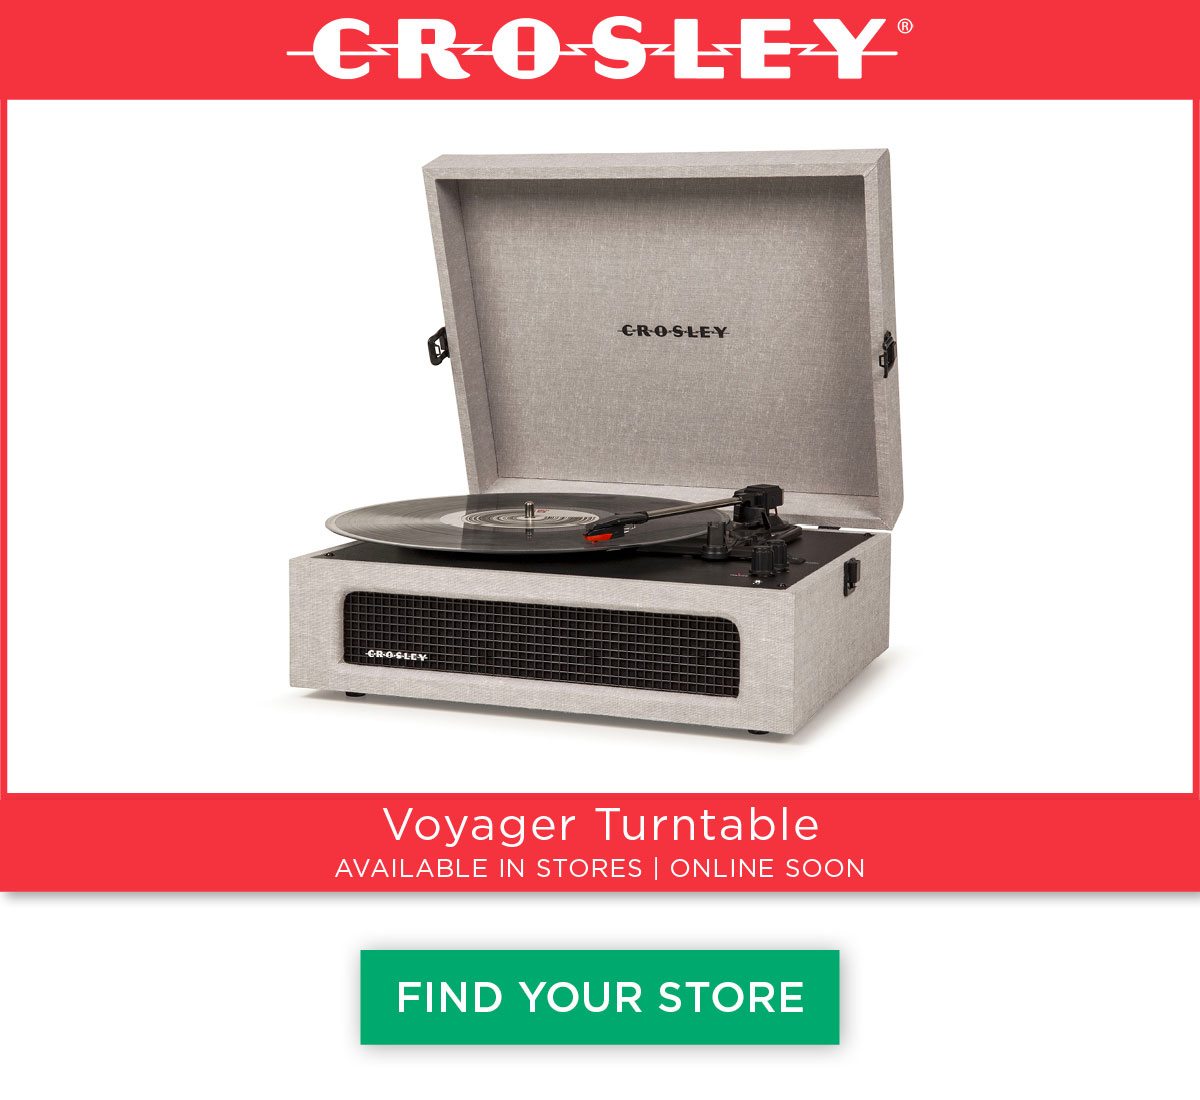 Crosley - Voyager Turntable in Grey